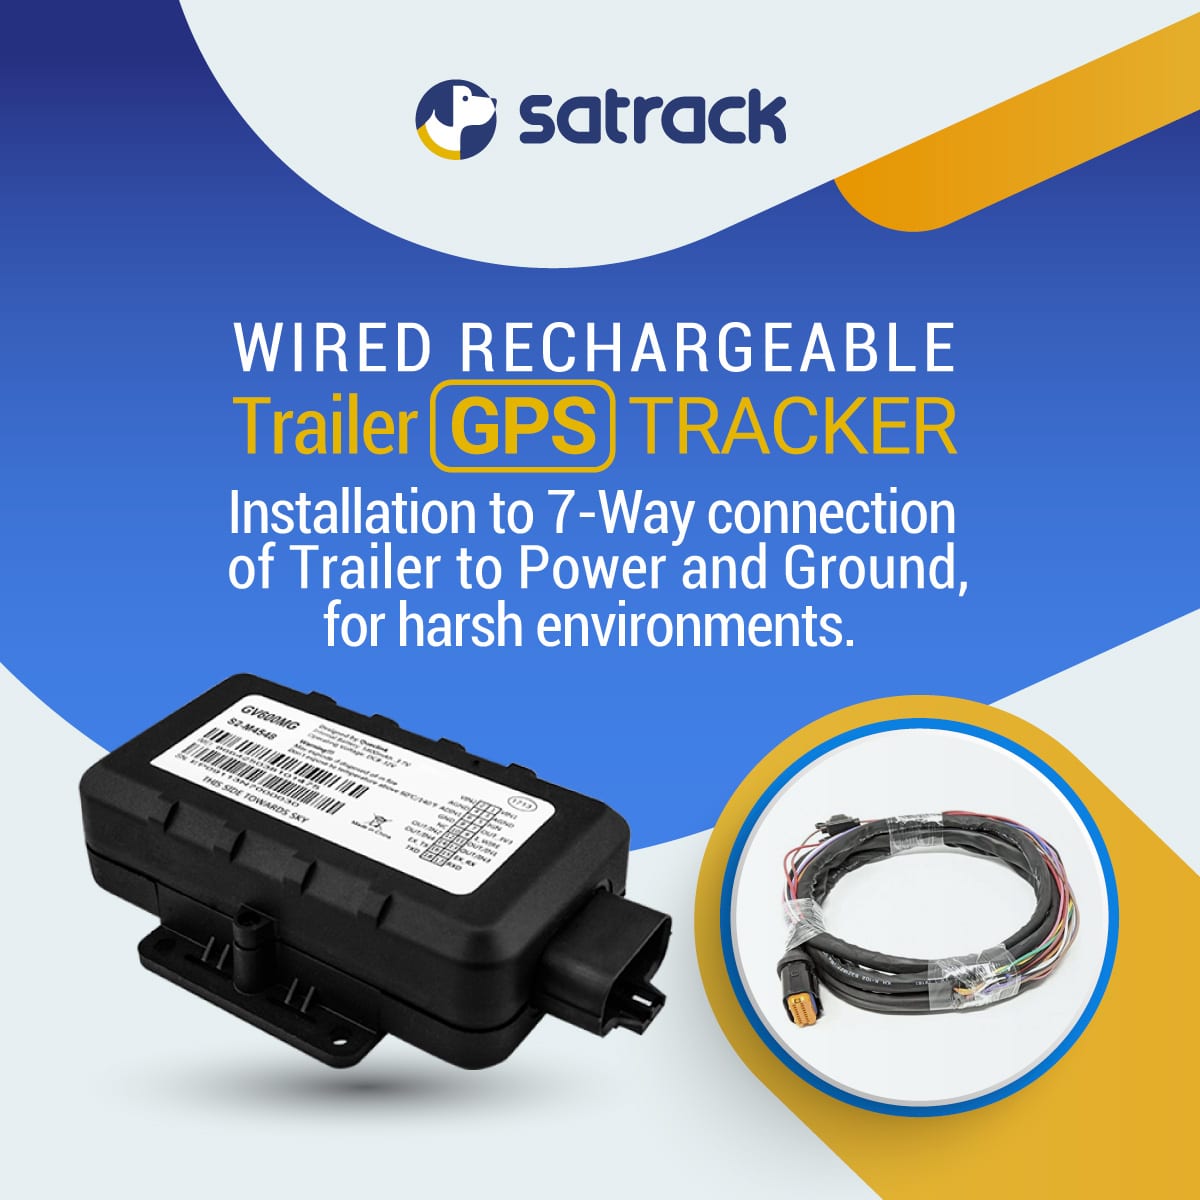 Oyster3 5G Waterproof GPS Tracker - Instant Alerts - ATLT Device